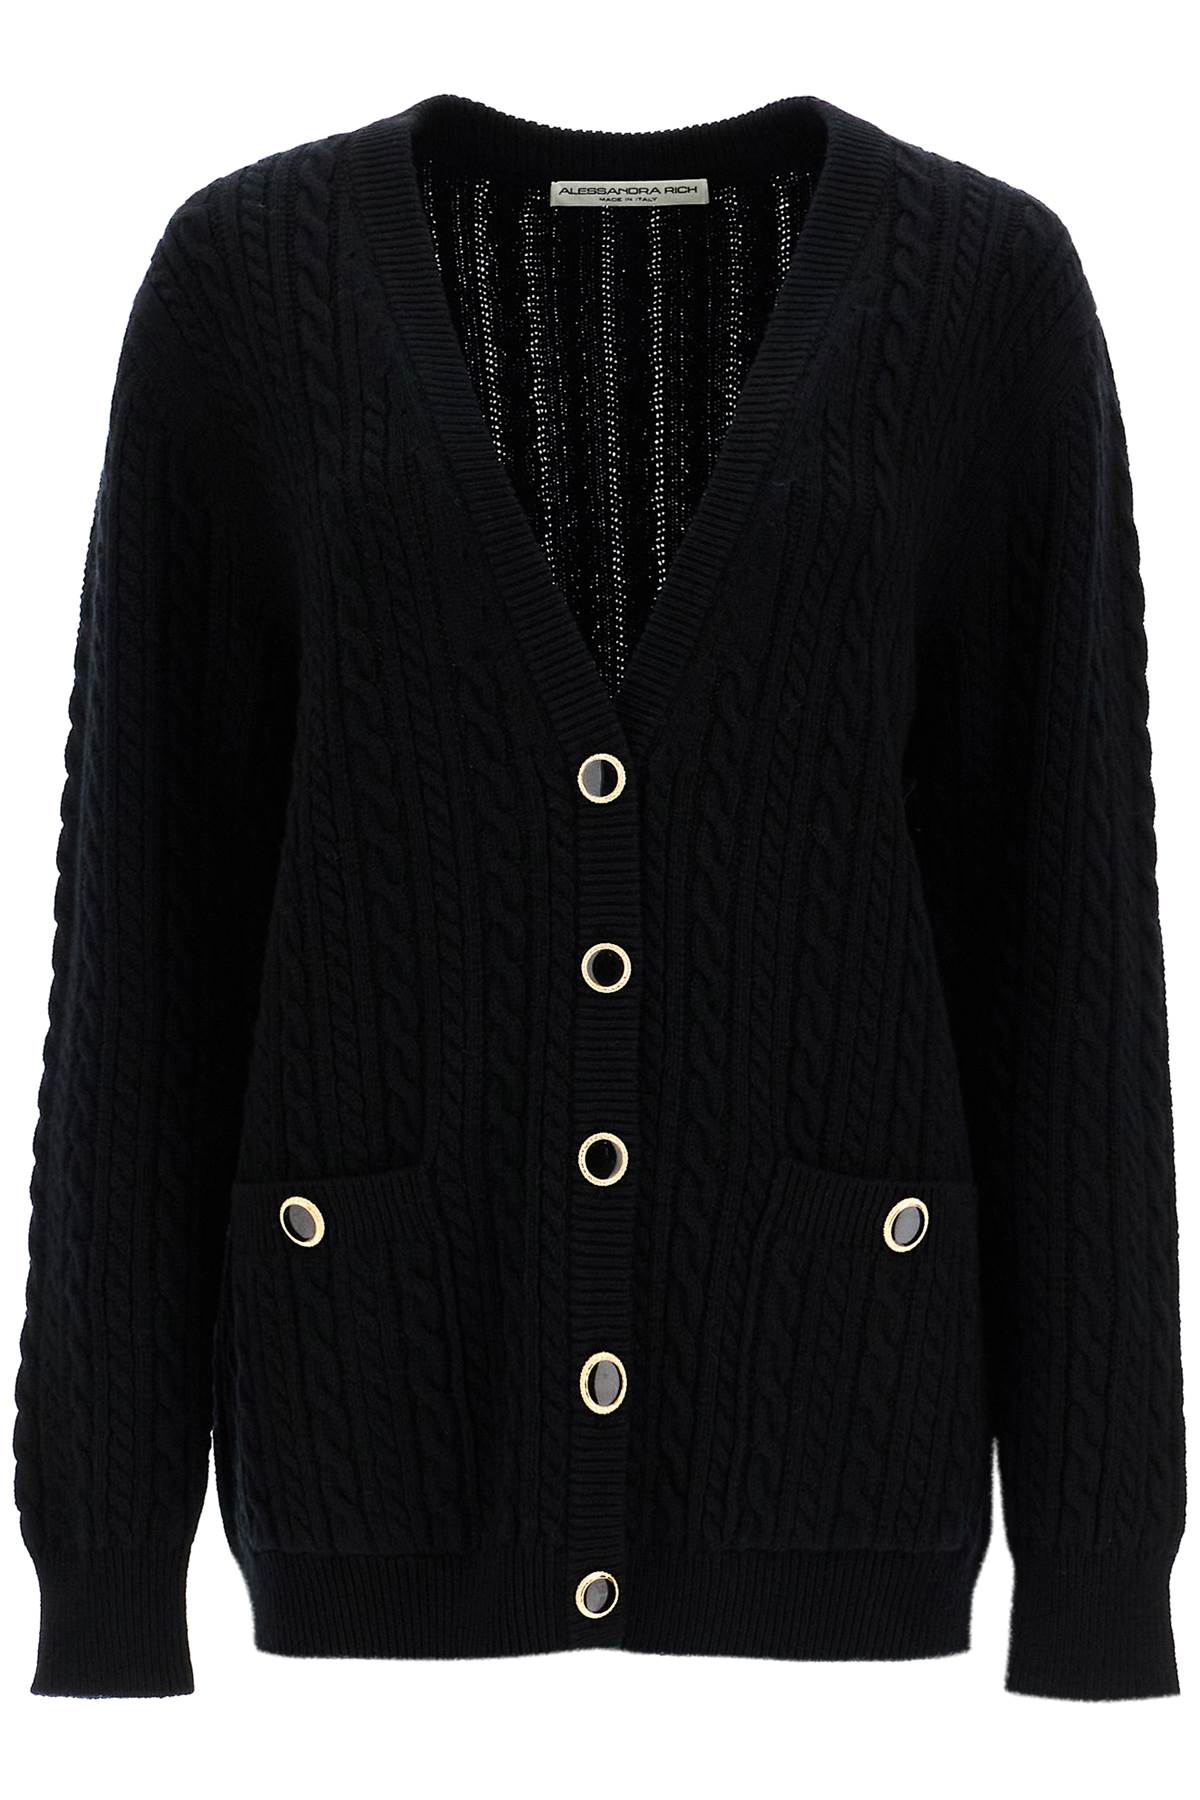 Alessandra Rich Oversized Wool Cardigan   Black